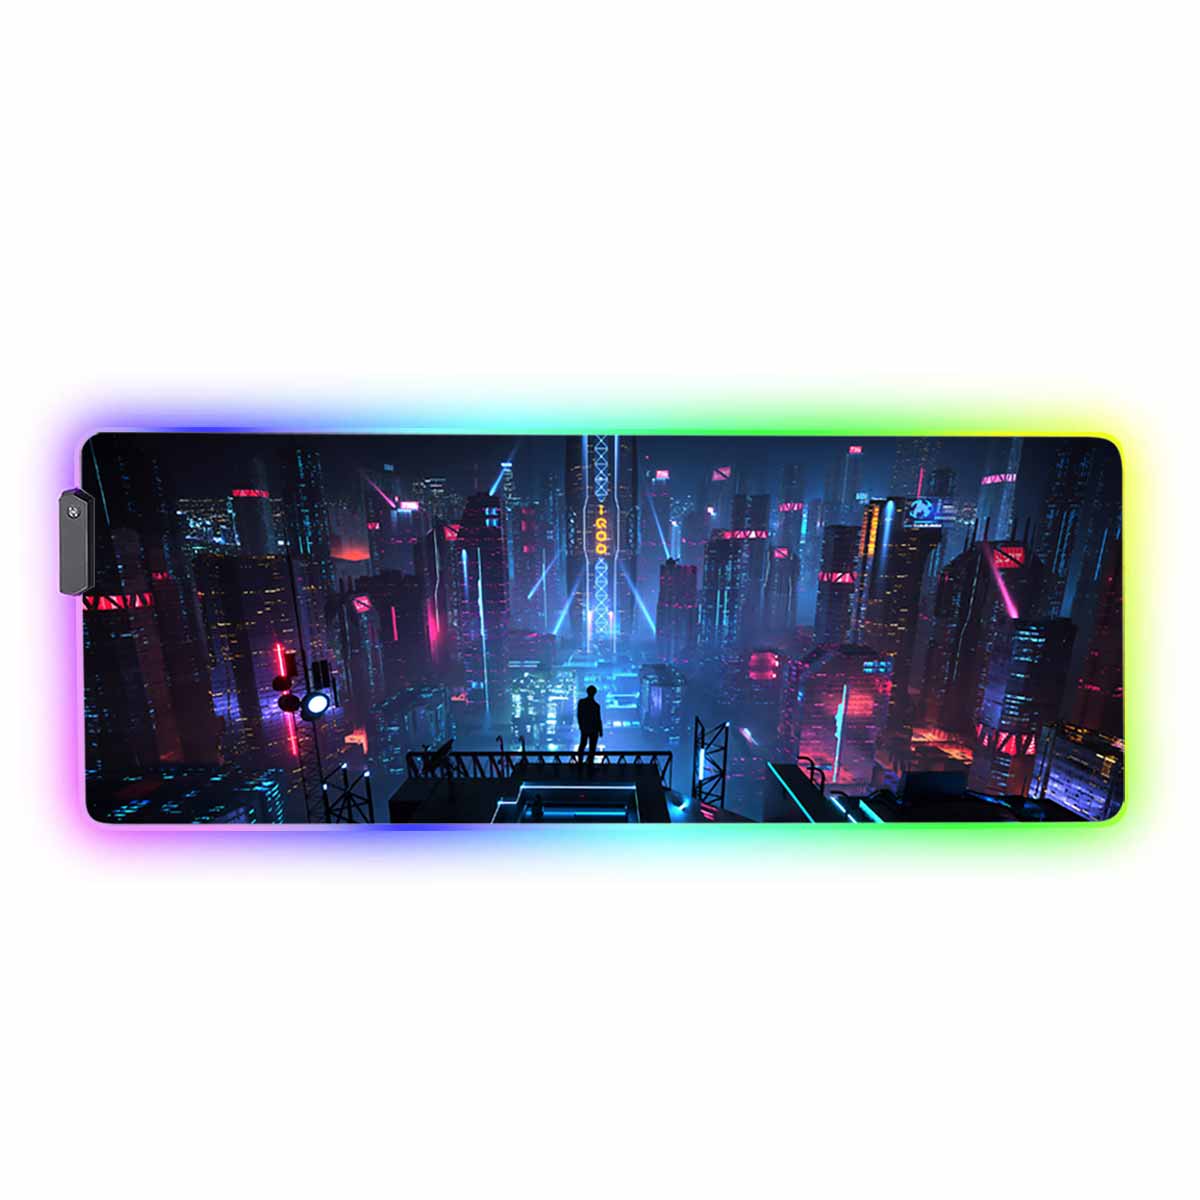 Neon City Night RGB Gaming Mouse Pad